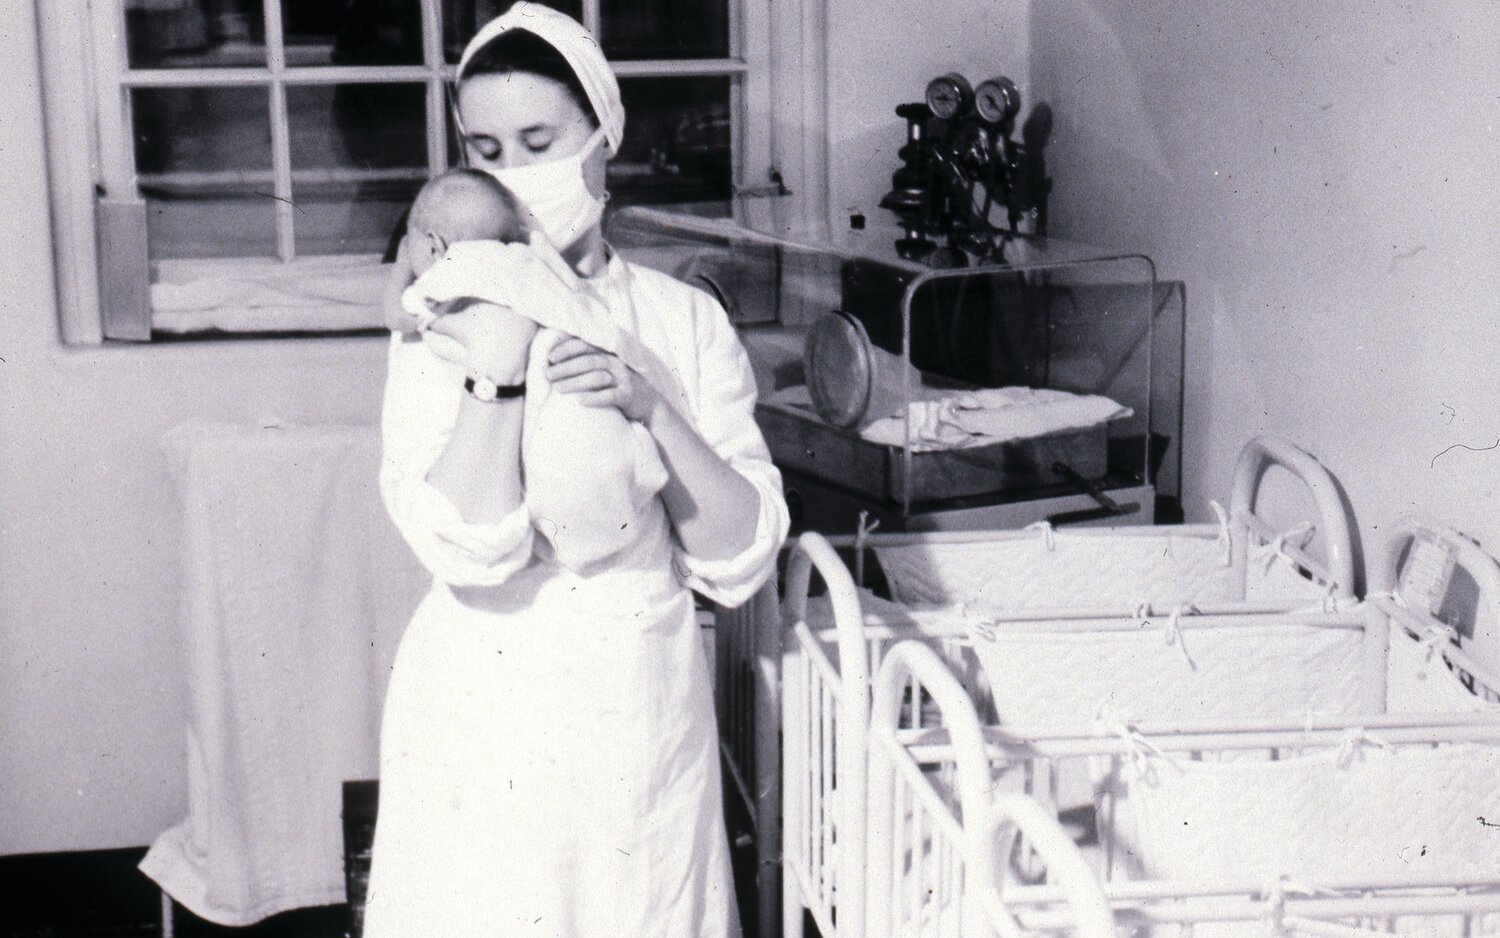 A Neonatal Care Ward was established at Doylestown Hospital.